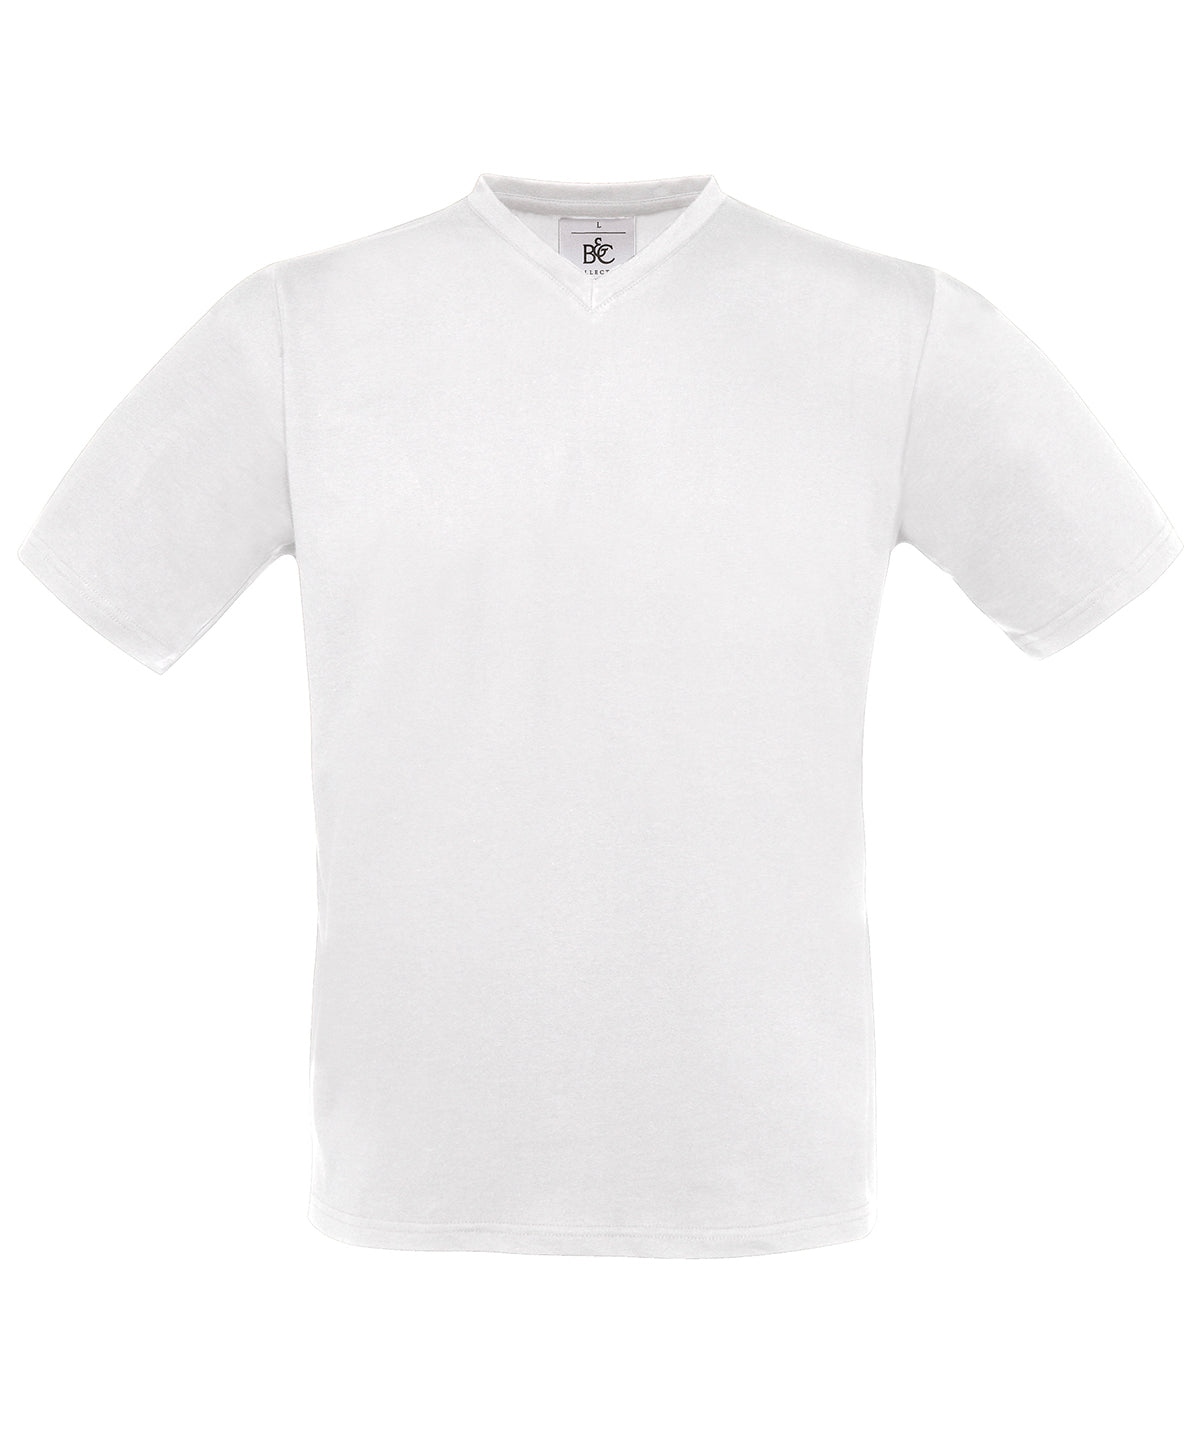 Personalised T-Shirts - Black B&C Collection B&C Exact v-neck